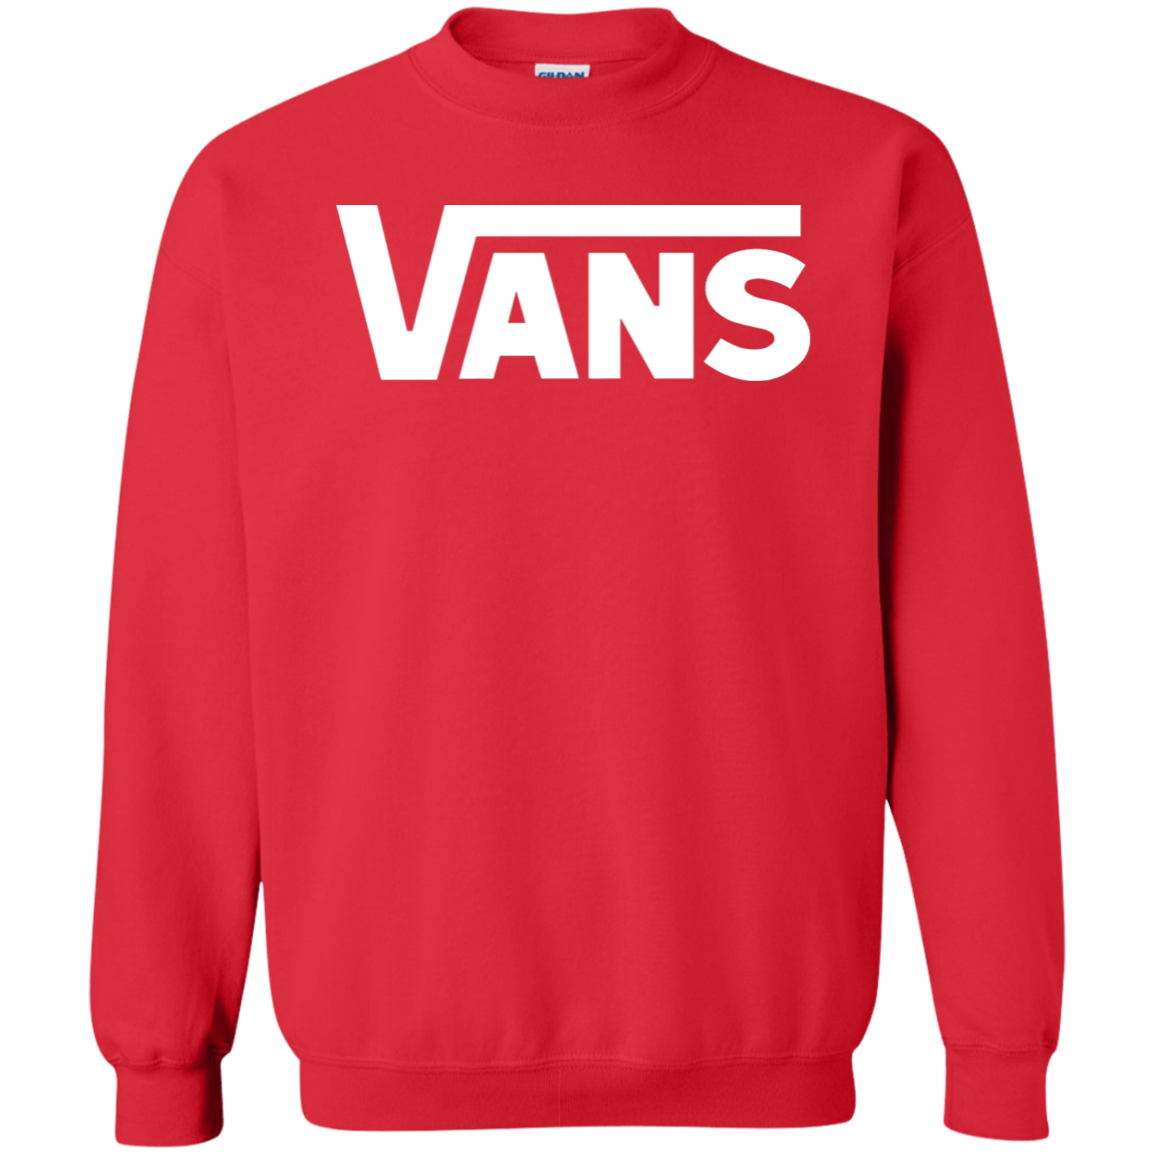 Vans Sweater - Black - Shipping 